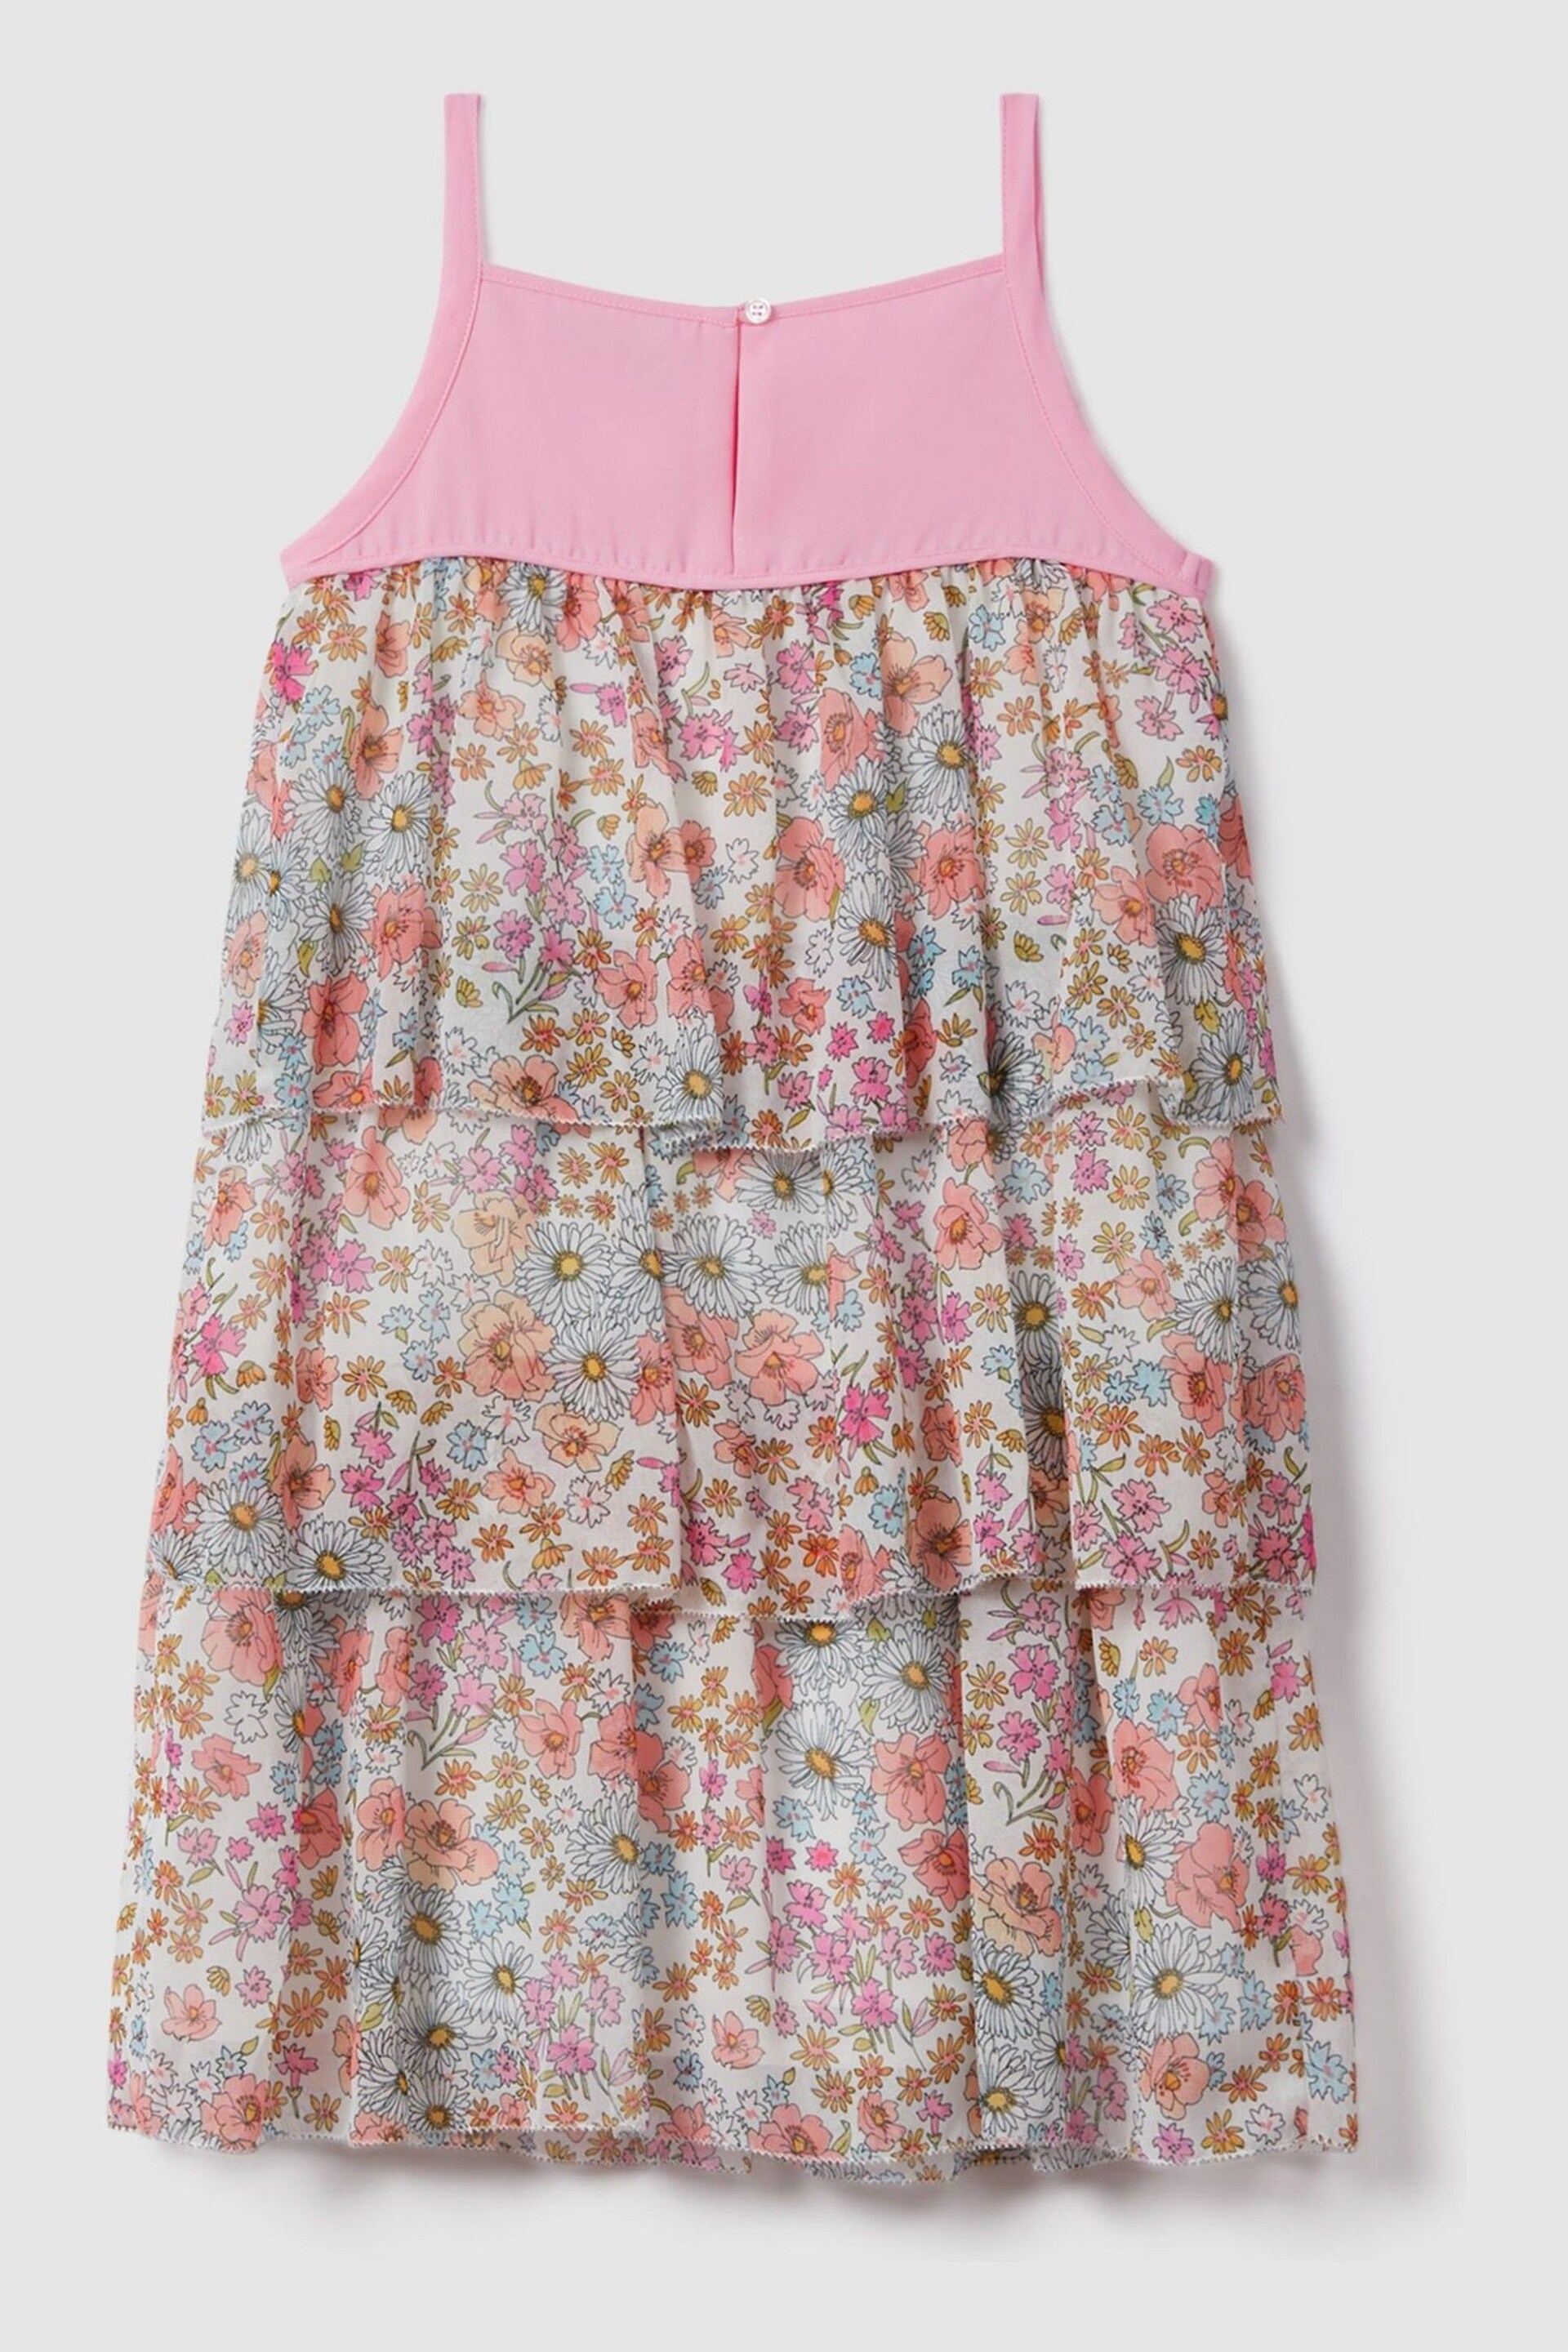 Reiss Pink Print Leela Teen Floral Print Tiered Dress - Image 4 of 5